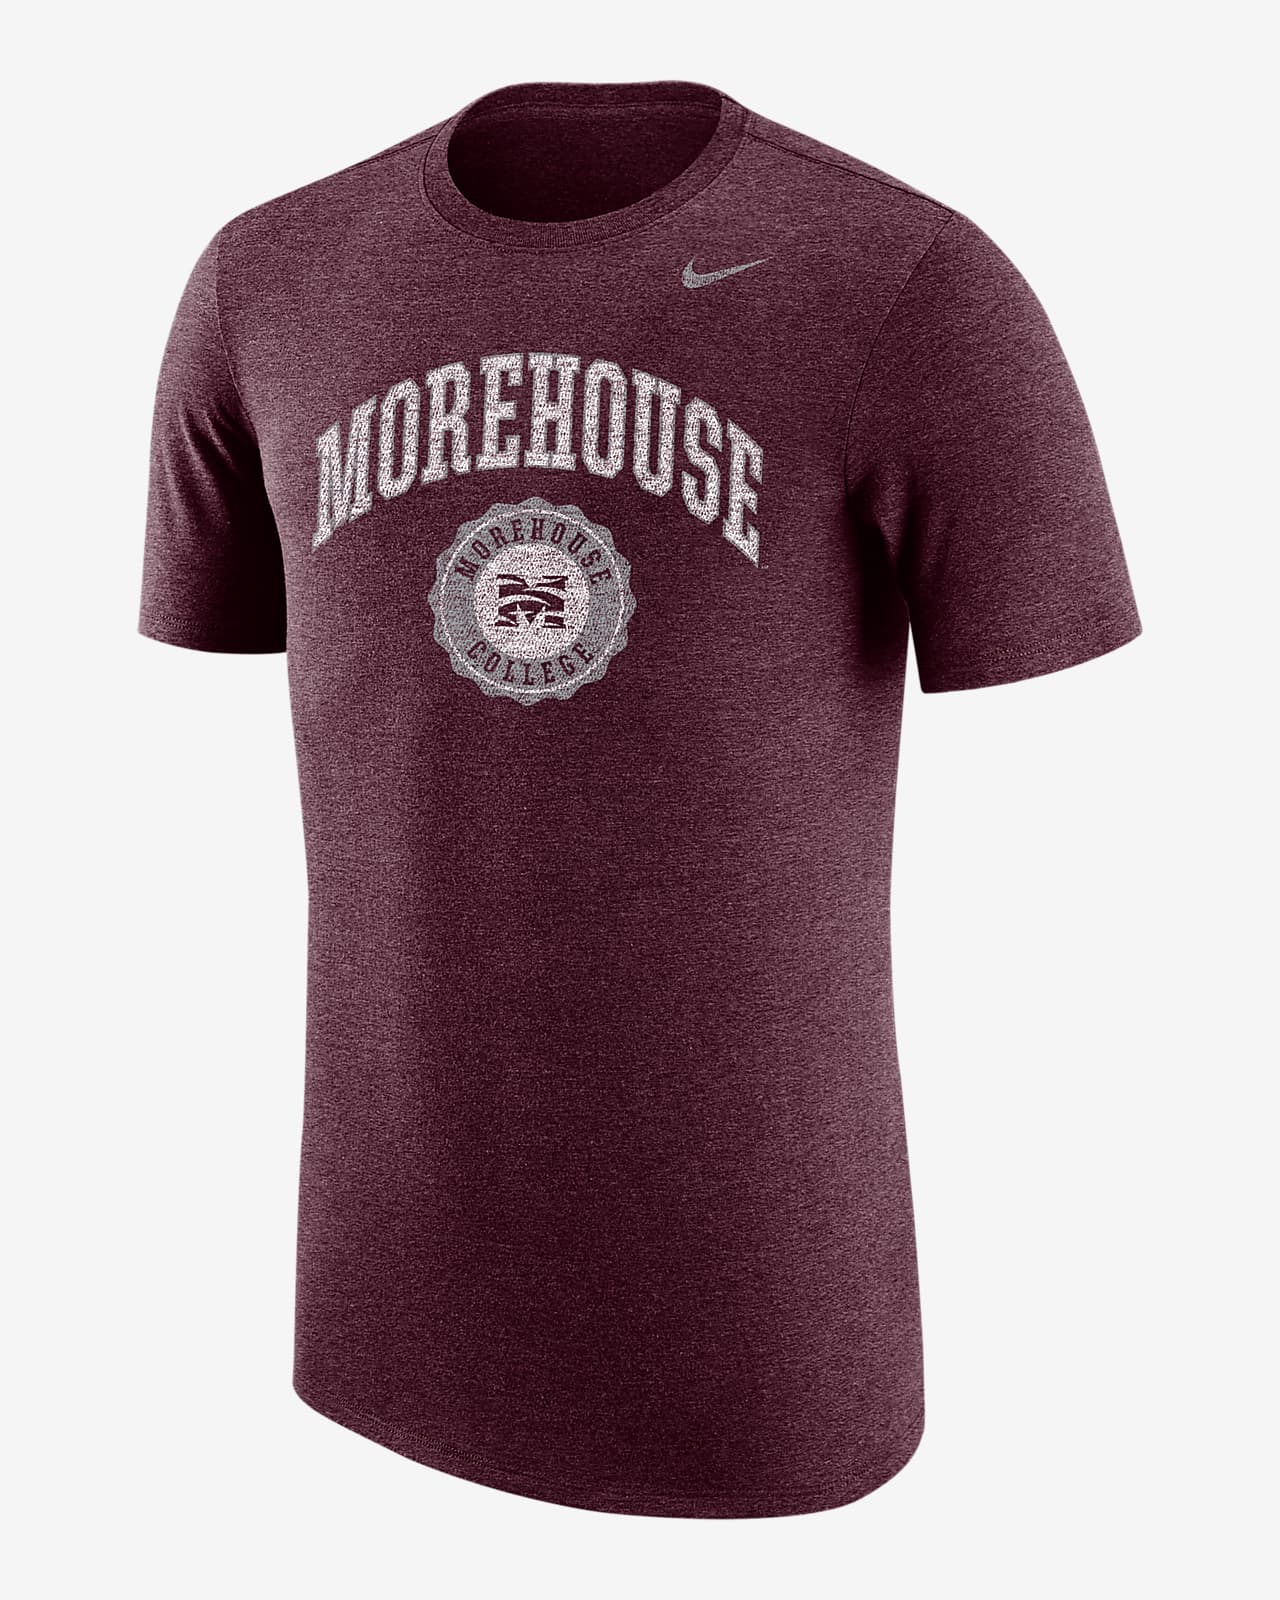 Nike College (Morehouse) Men's T-Shirt